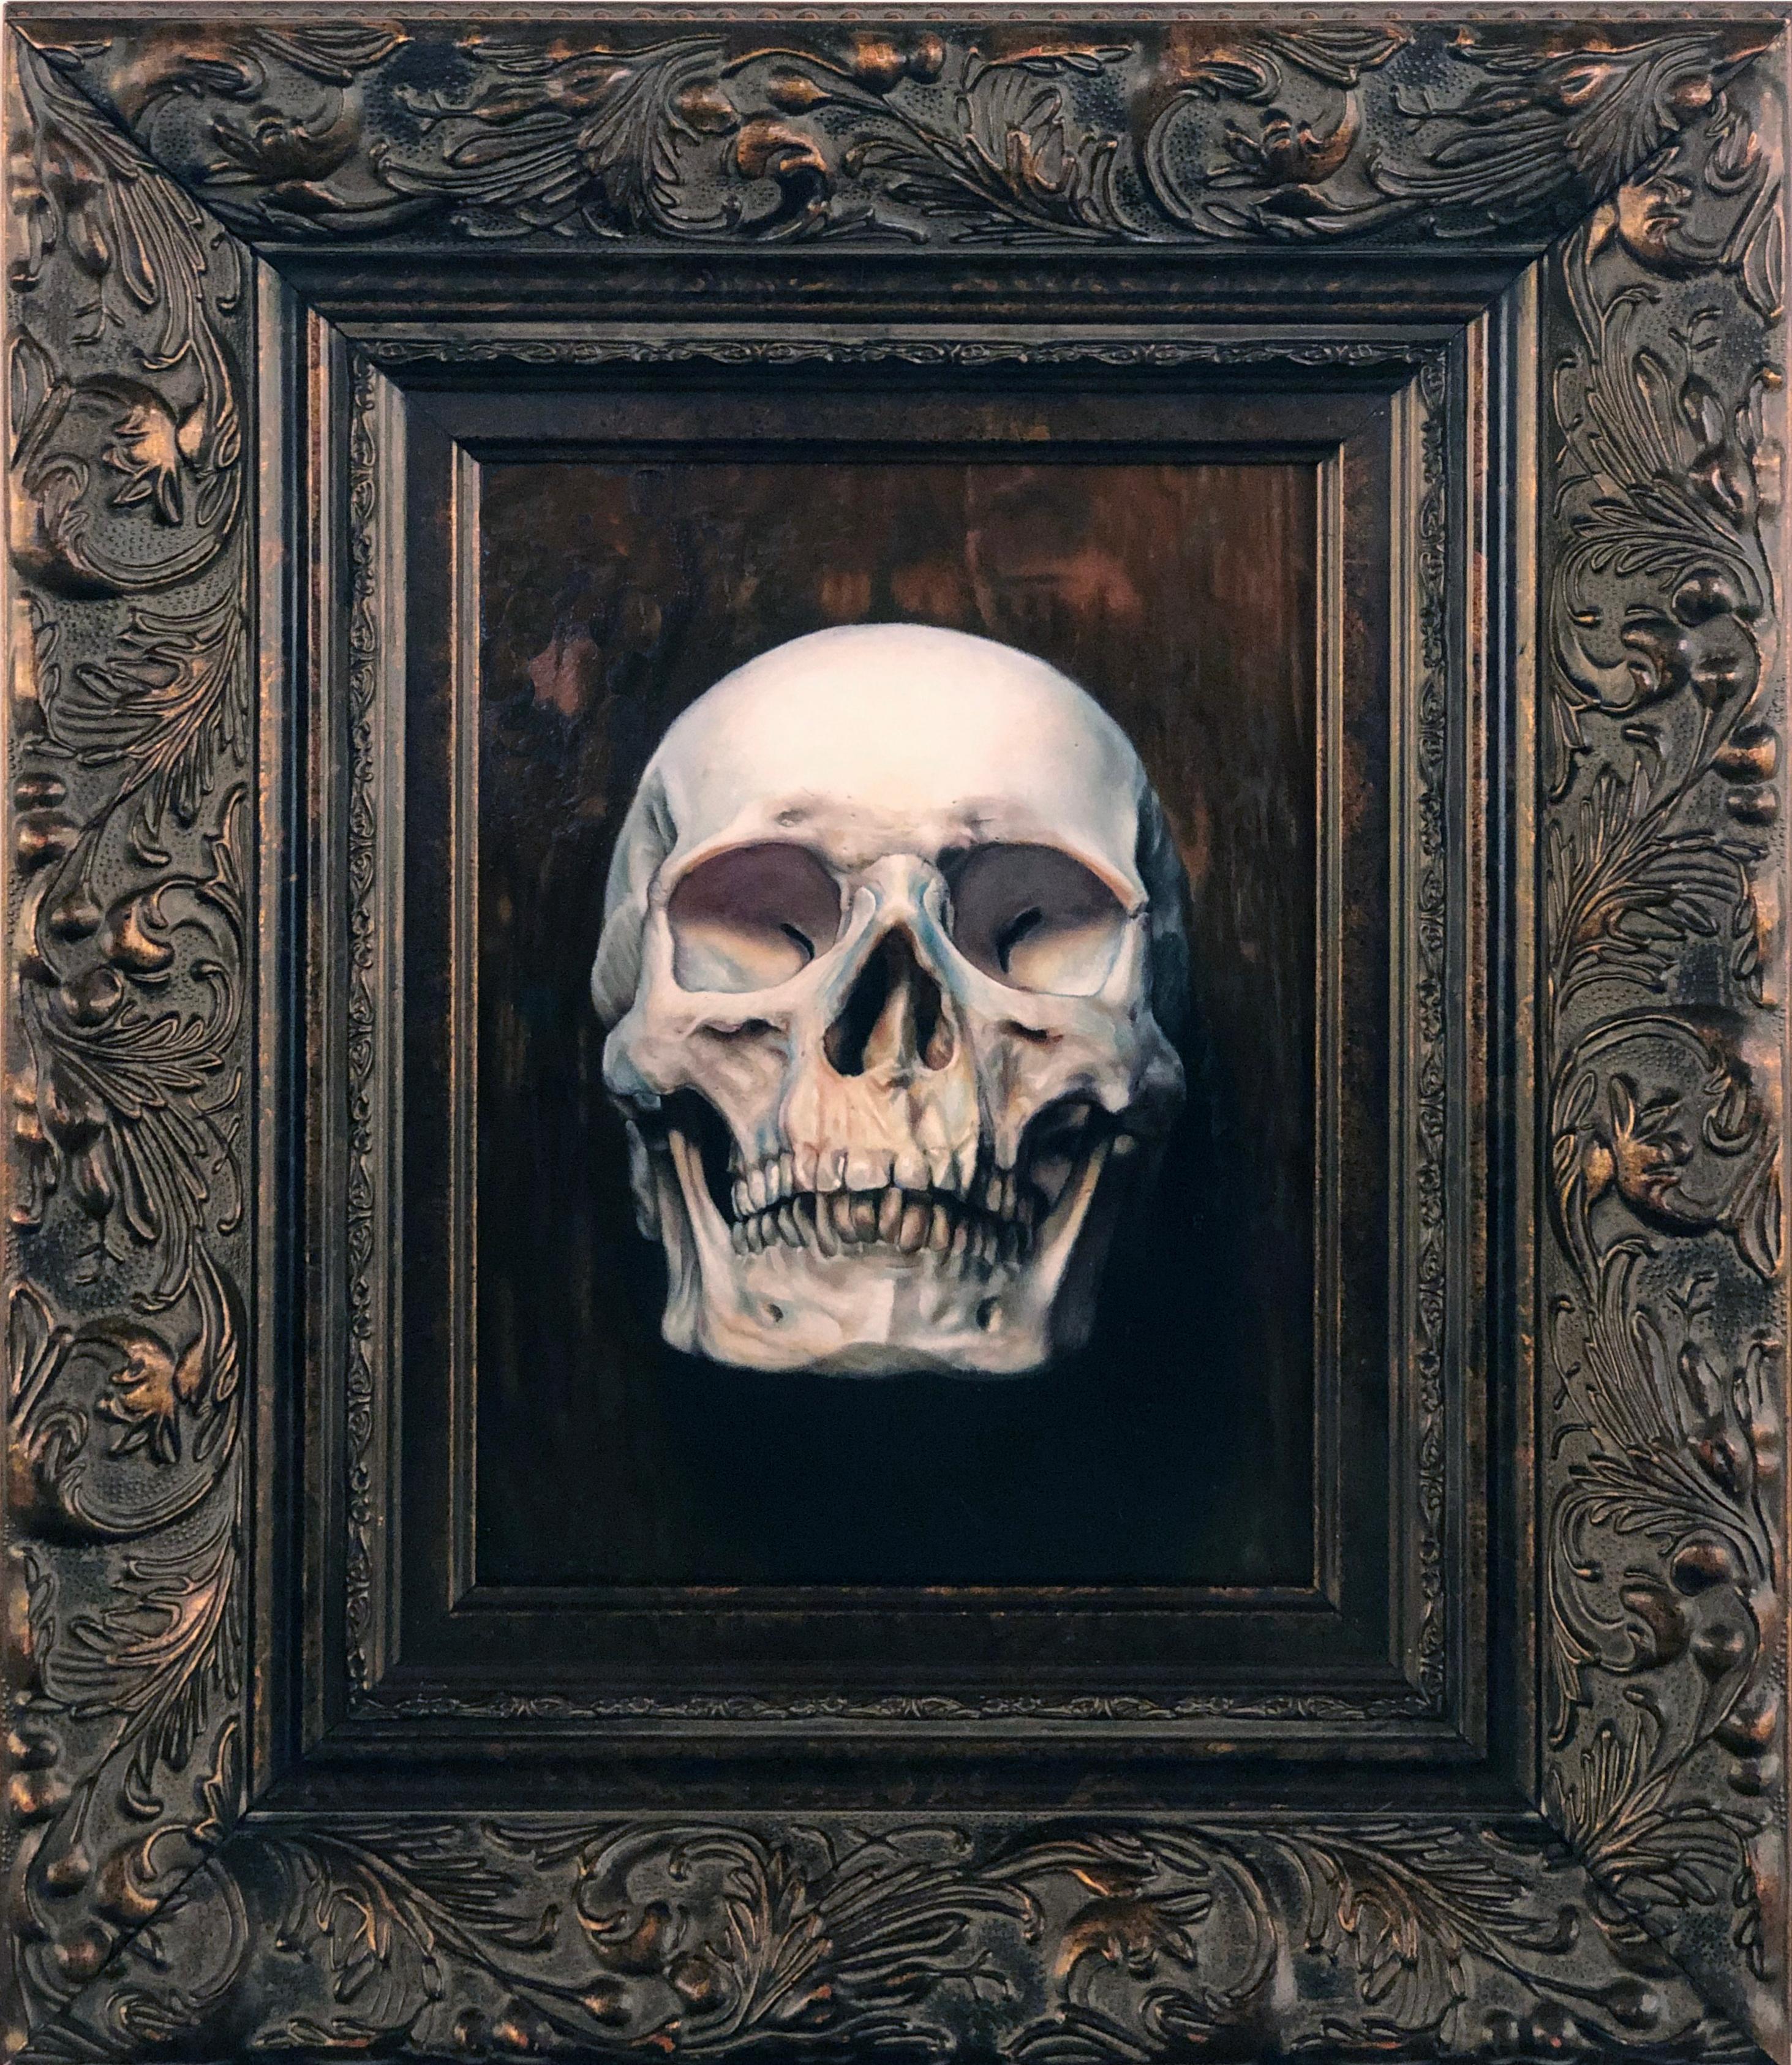 Matthew Cook Figurative Painting - Vanitas - Original Oil Painting of a Human Skull in 17th Century Dutch Style